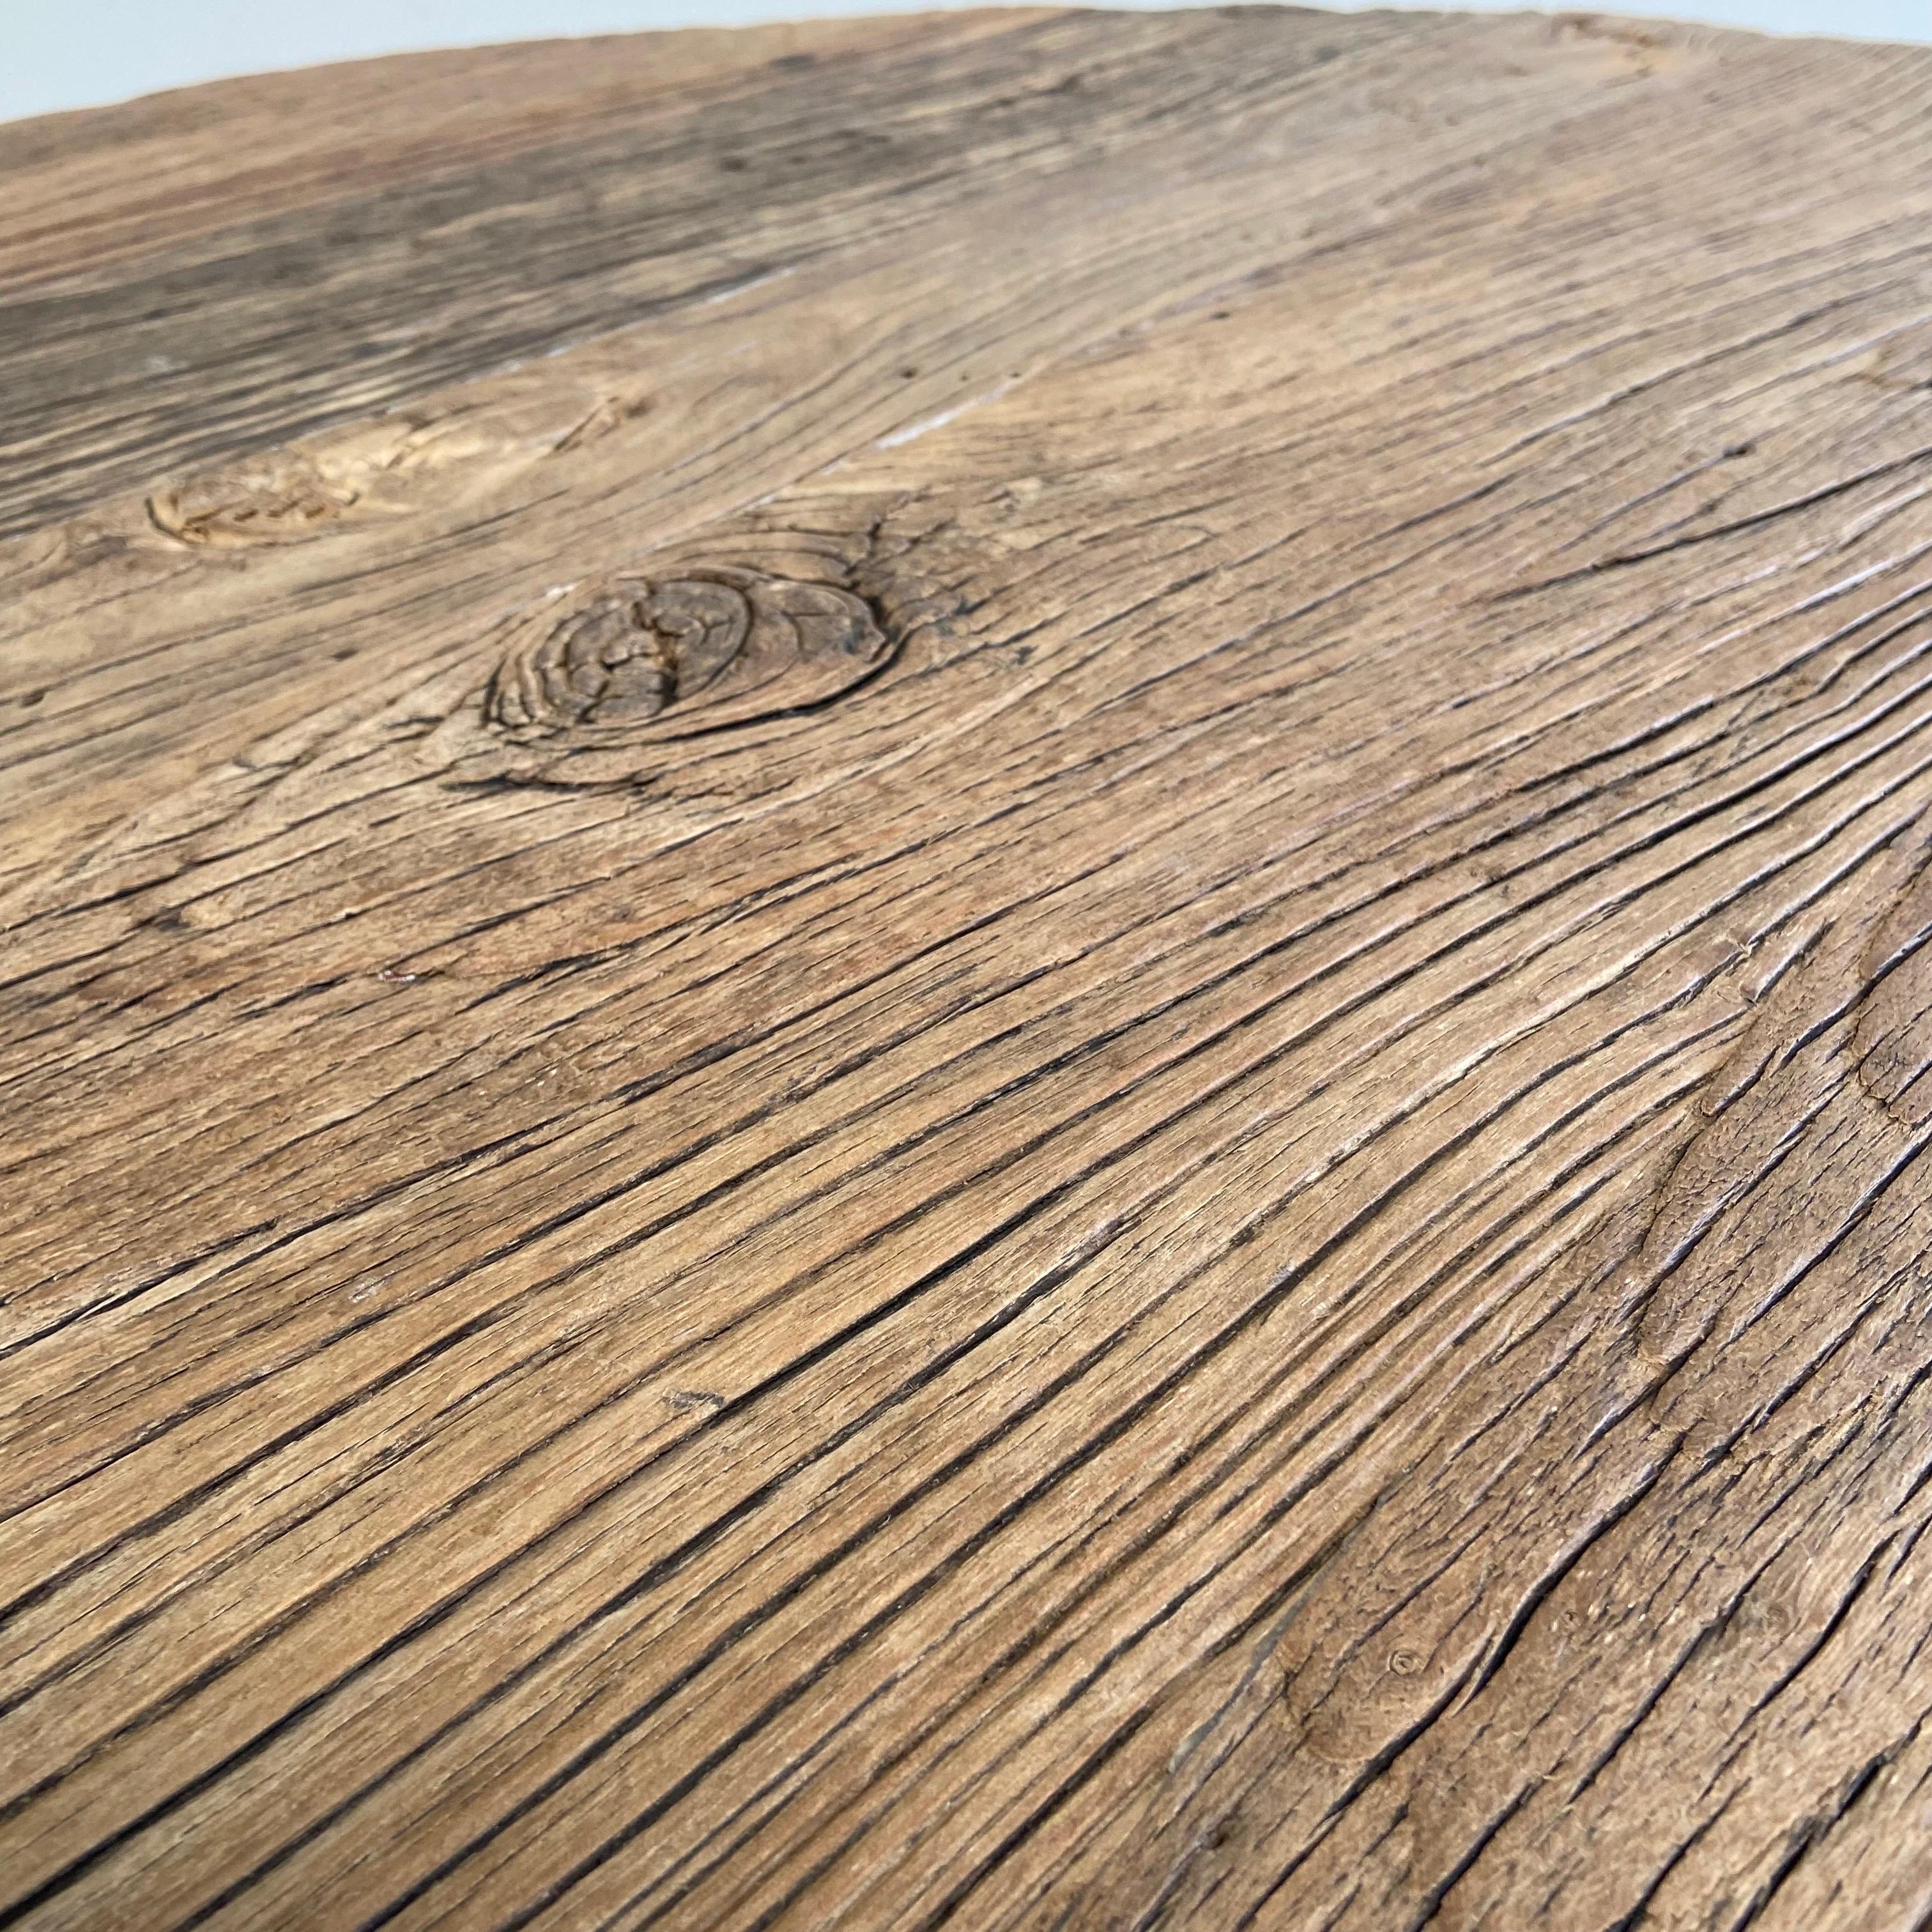 Custom Made X Base Elm Wood Coffee Table 4